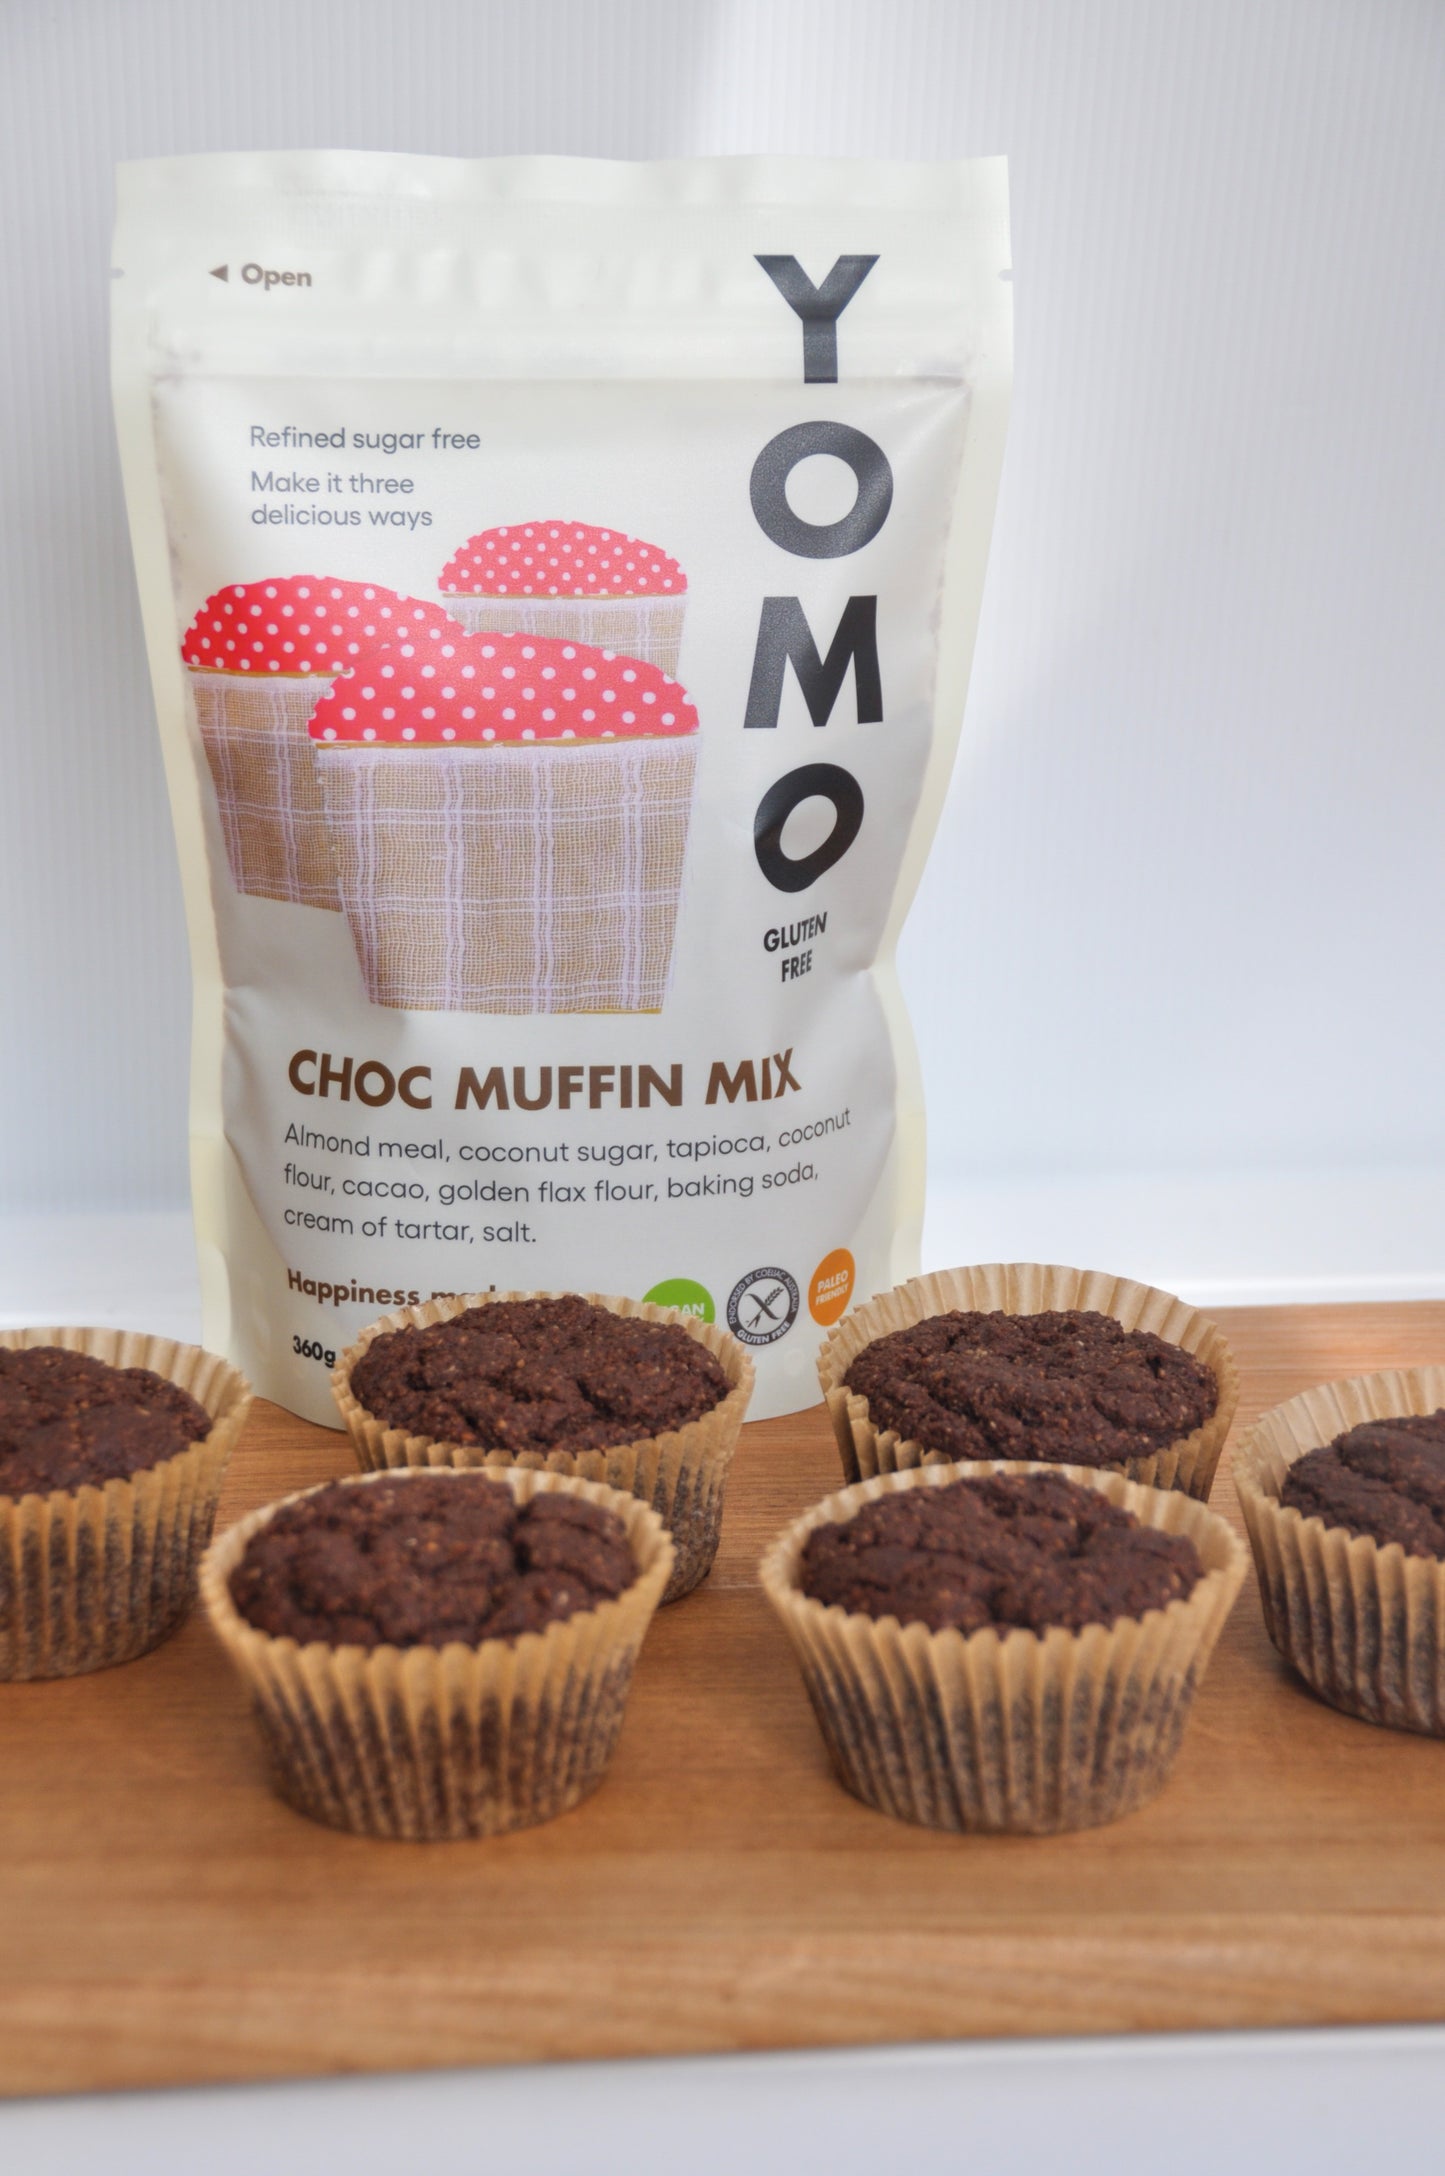 Choc Muffin mix